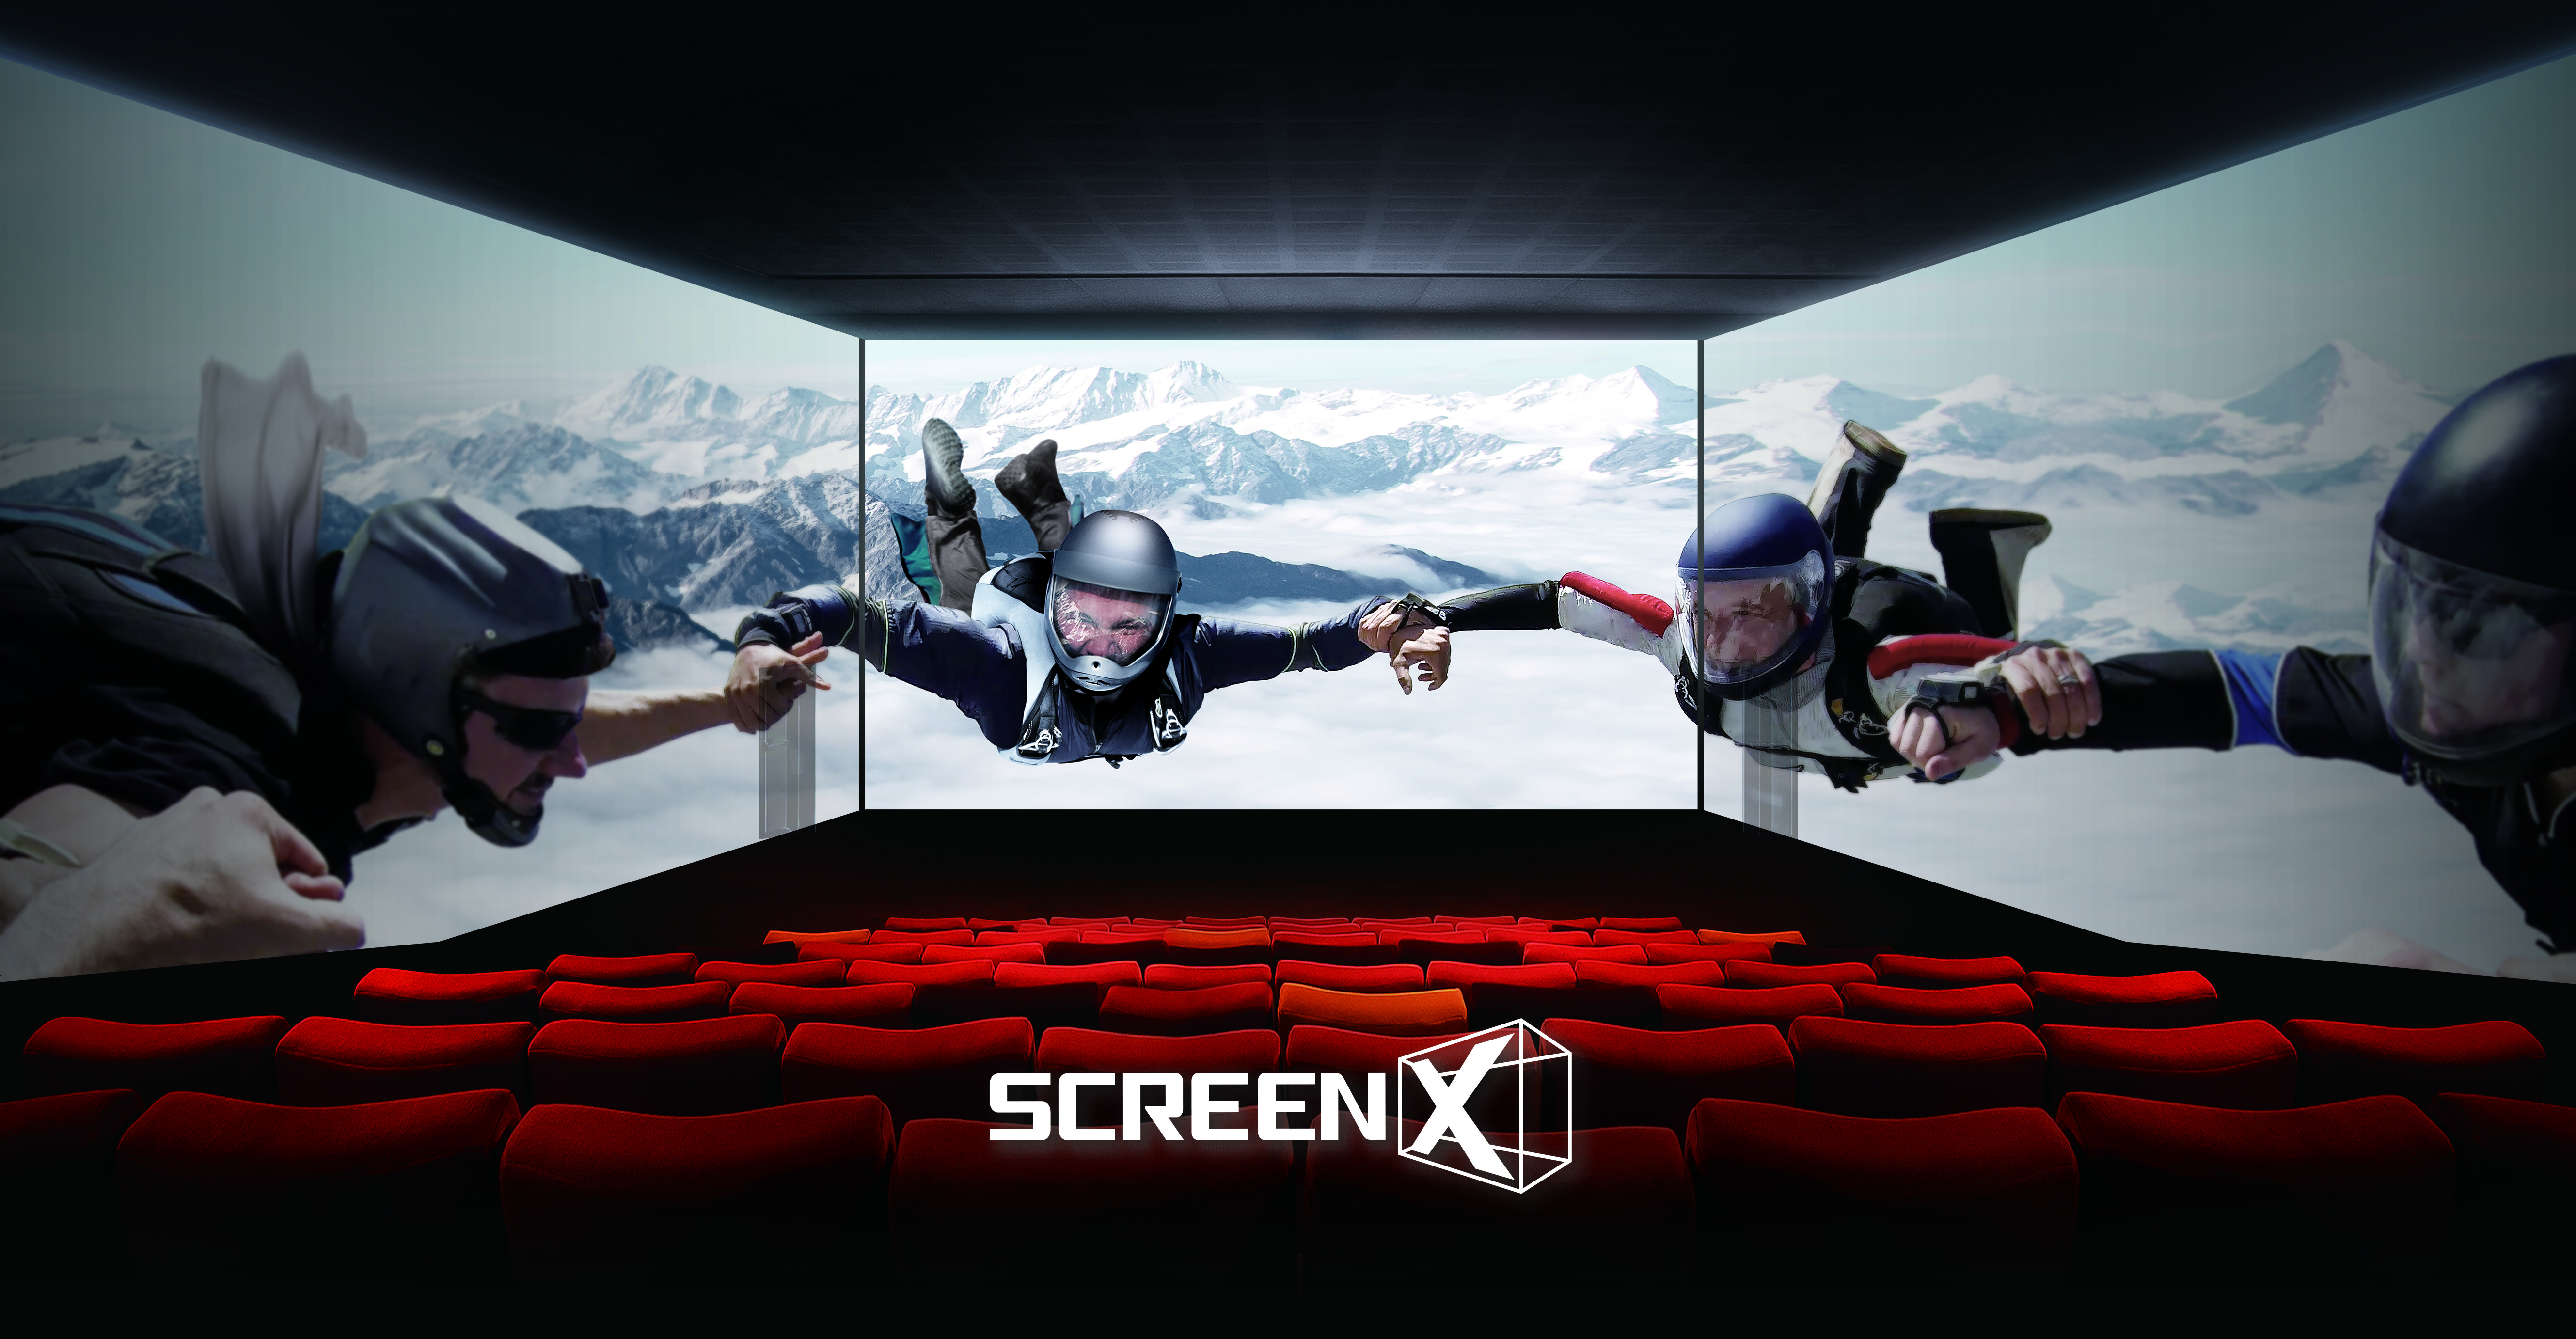 The triple-screen ScreenX cinema.